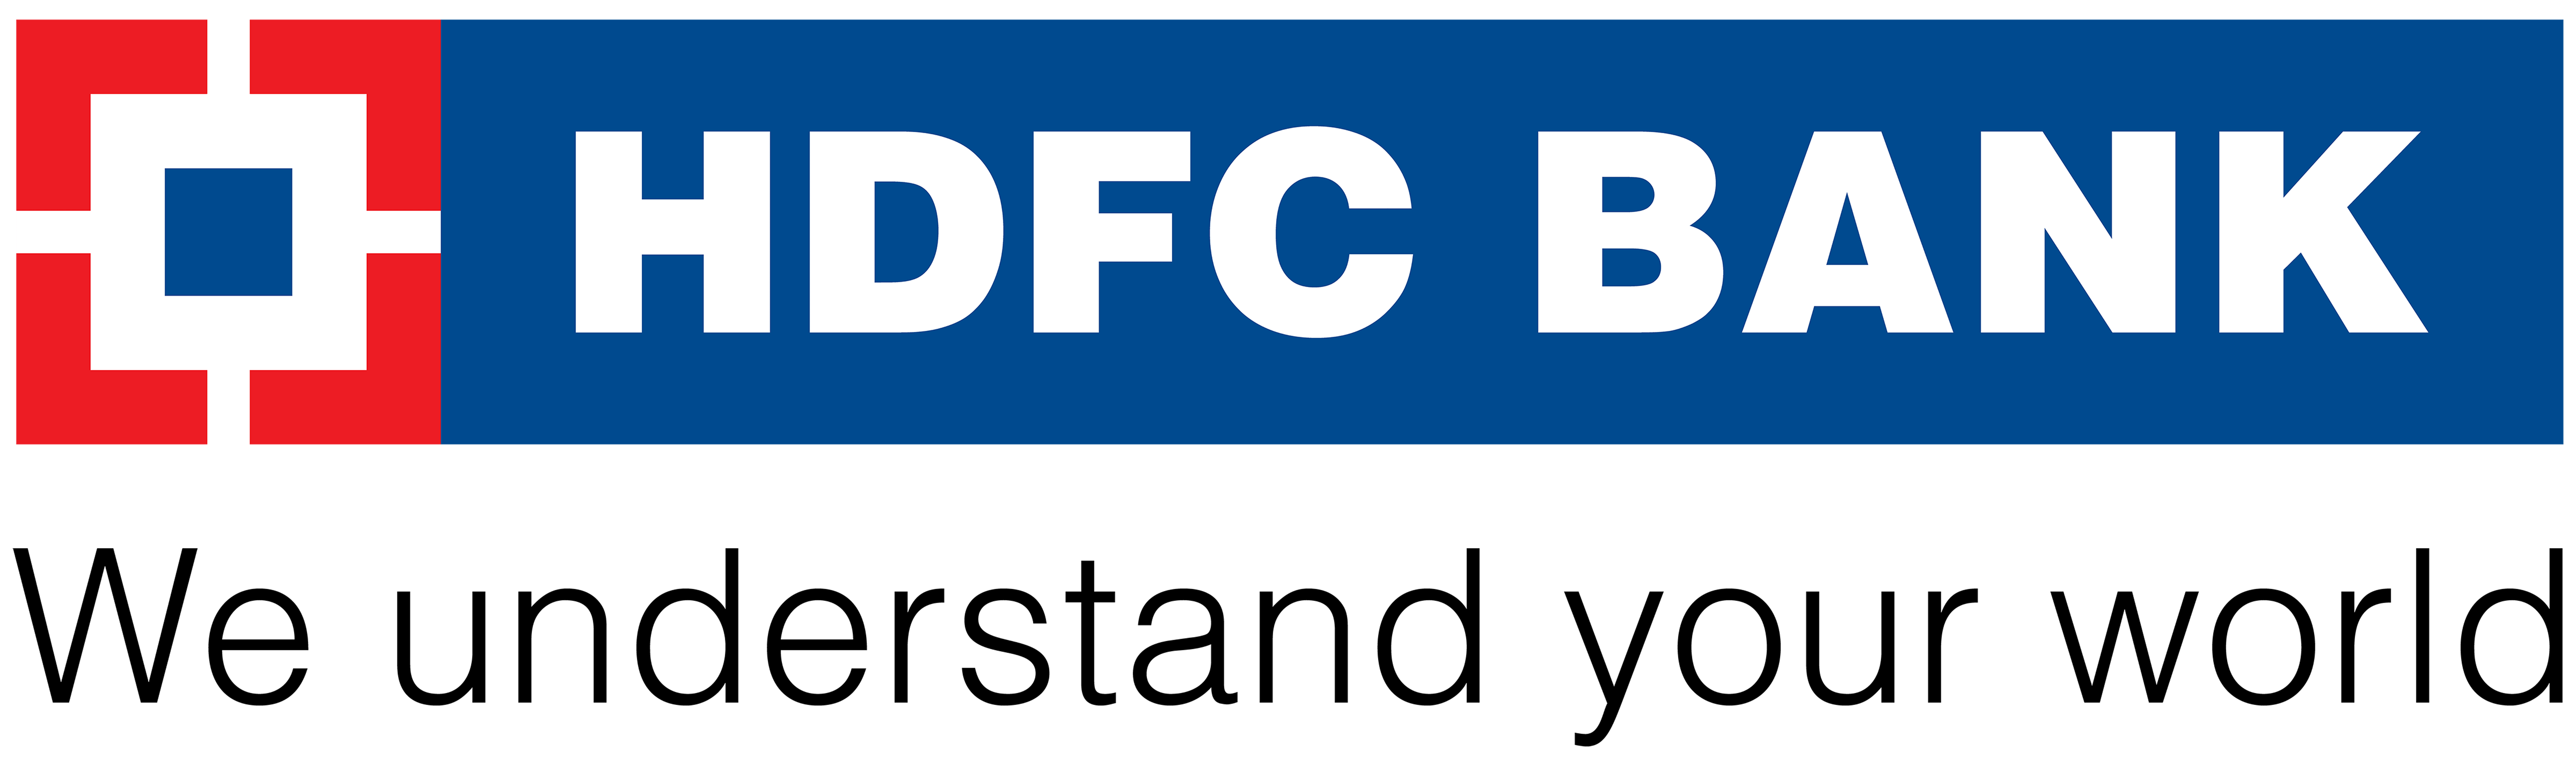 HDFC Bank Logo - HDFC-Bank-logo_Hires | EPG